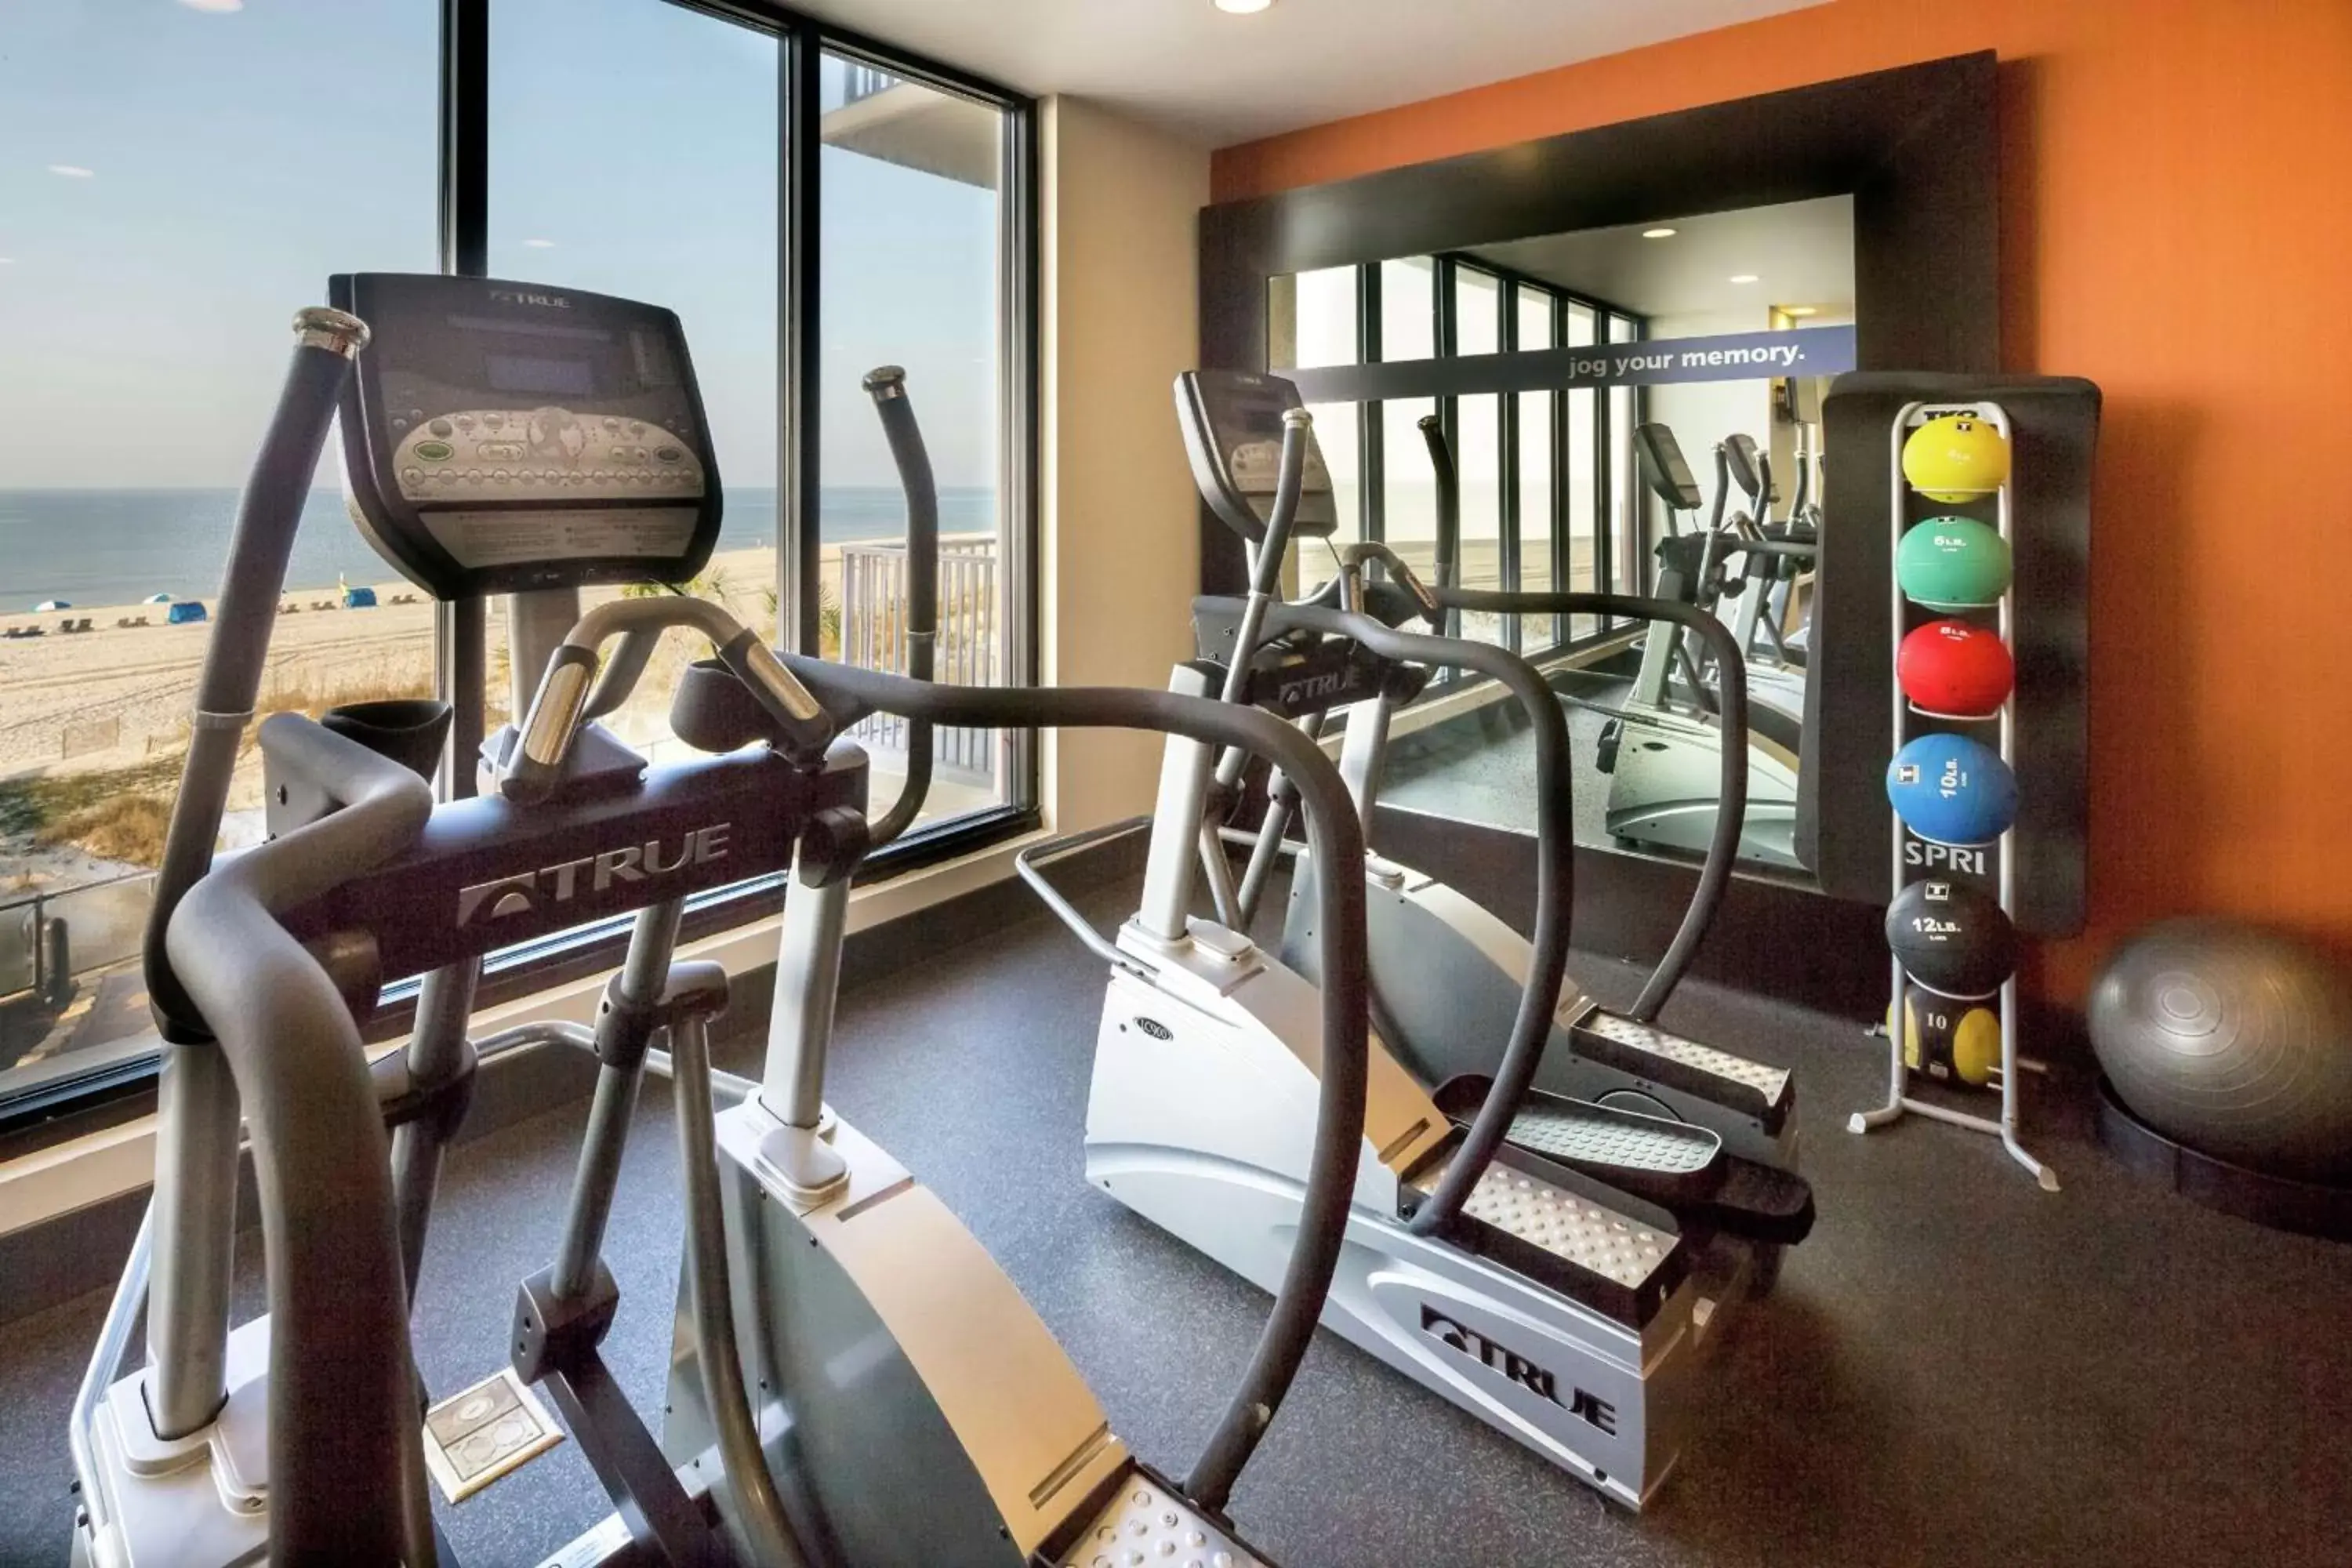 Fitness centre/facilities, Fitness Center/Facilities in Hampton Inn & Suites - Orange Beach